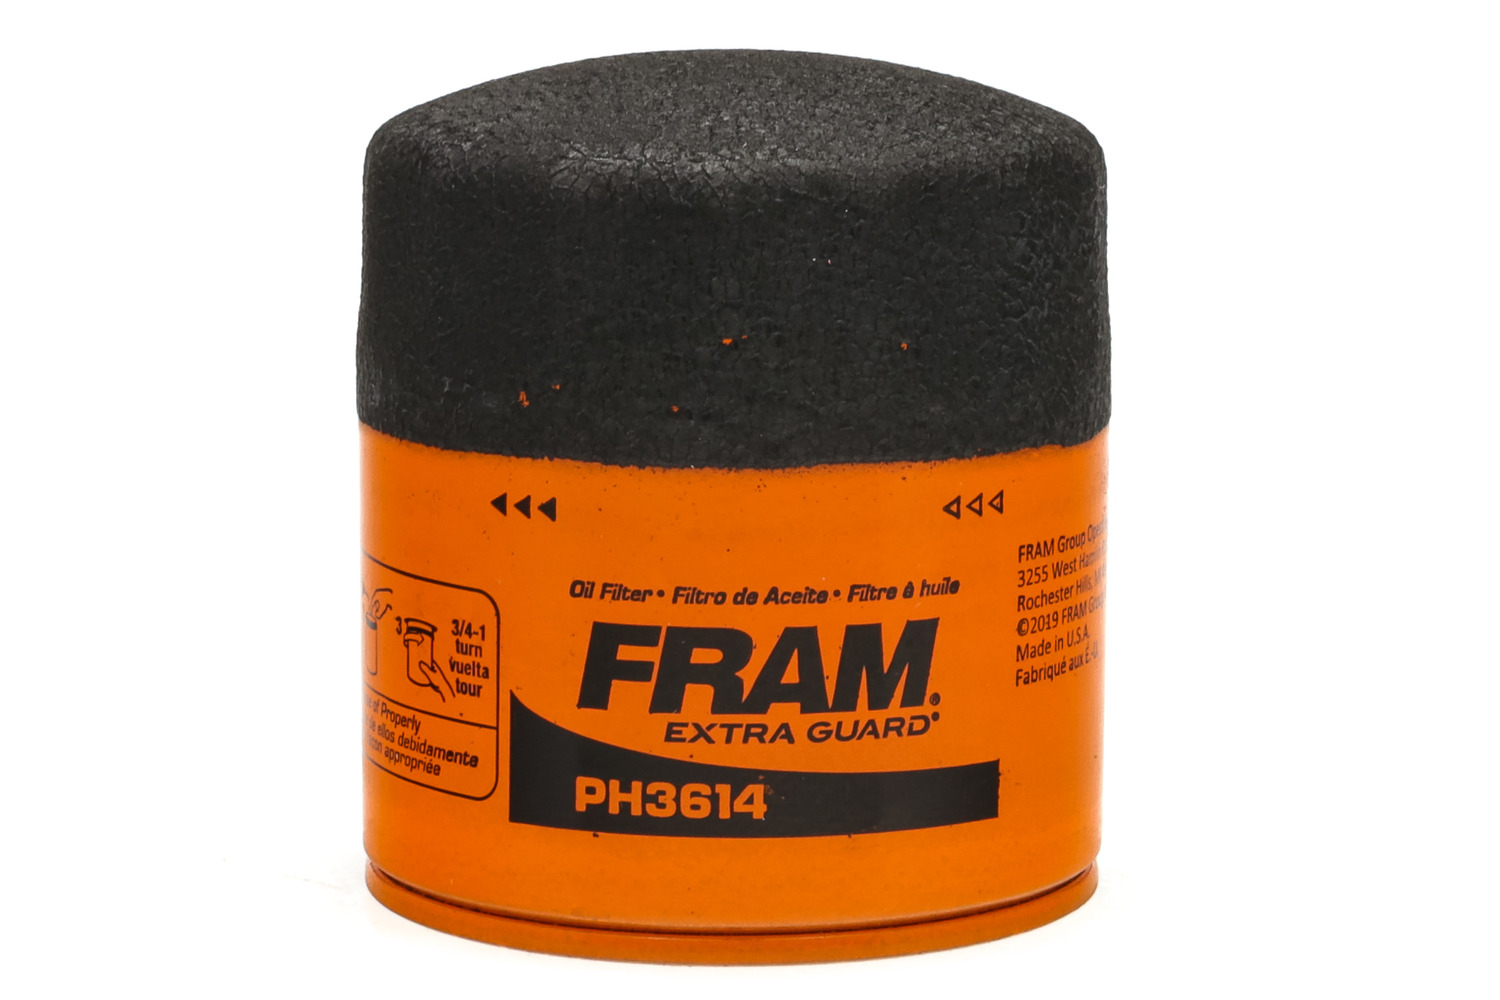 FRAM - Extra Guard Engine Oil Filter - FRA PH3614